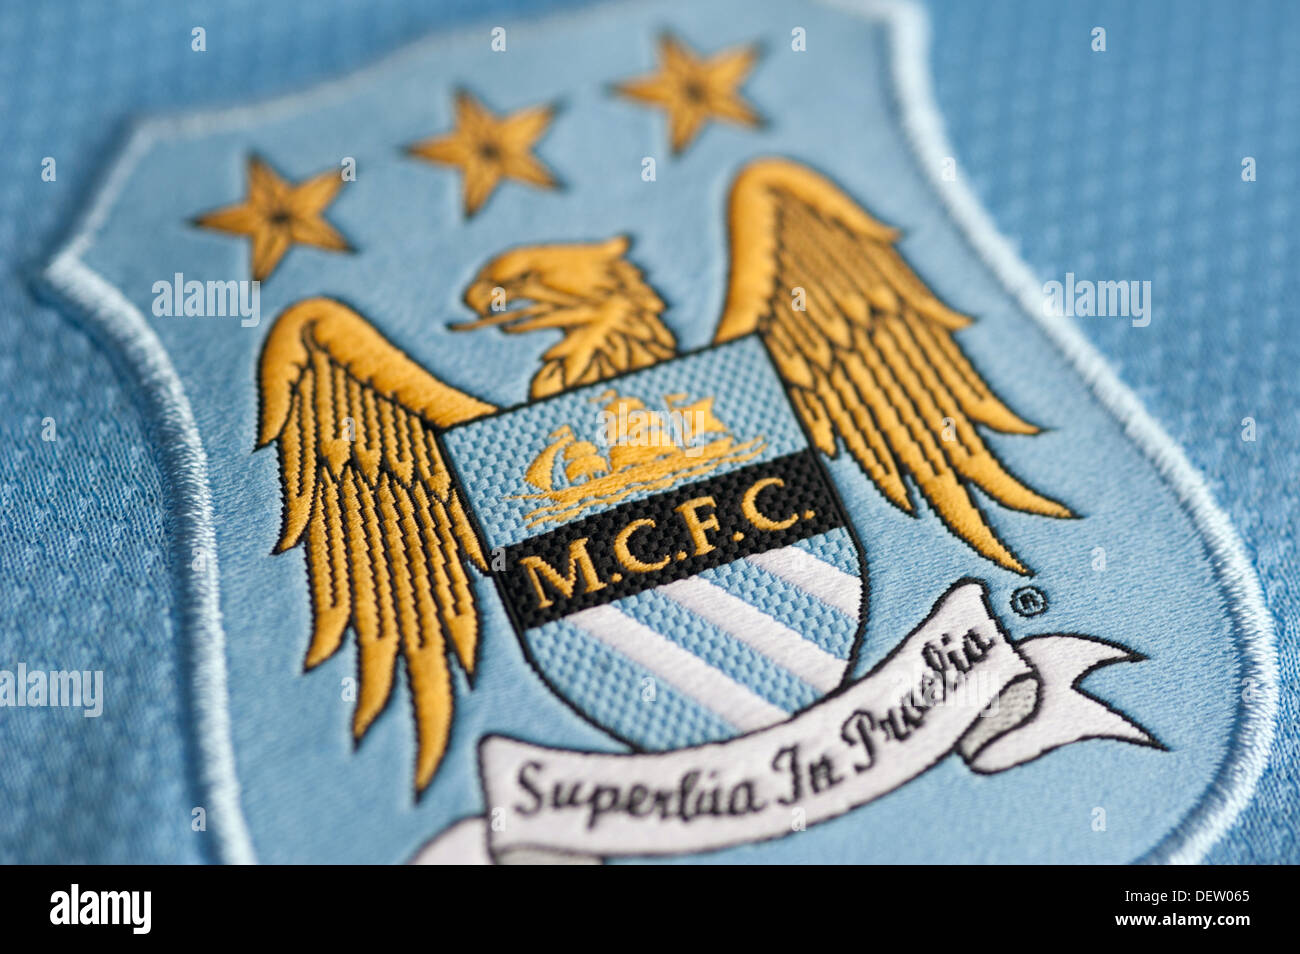 Manchester City FC Club Crest Stock Photo